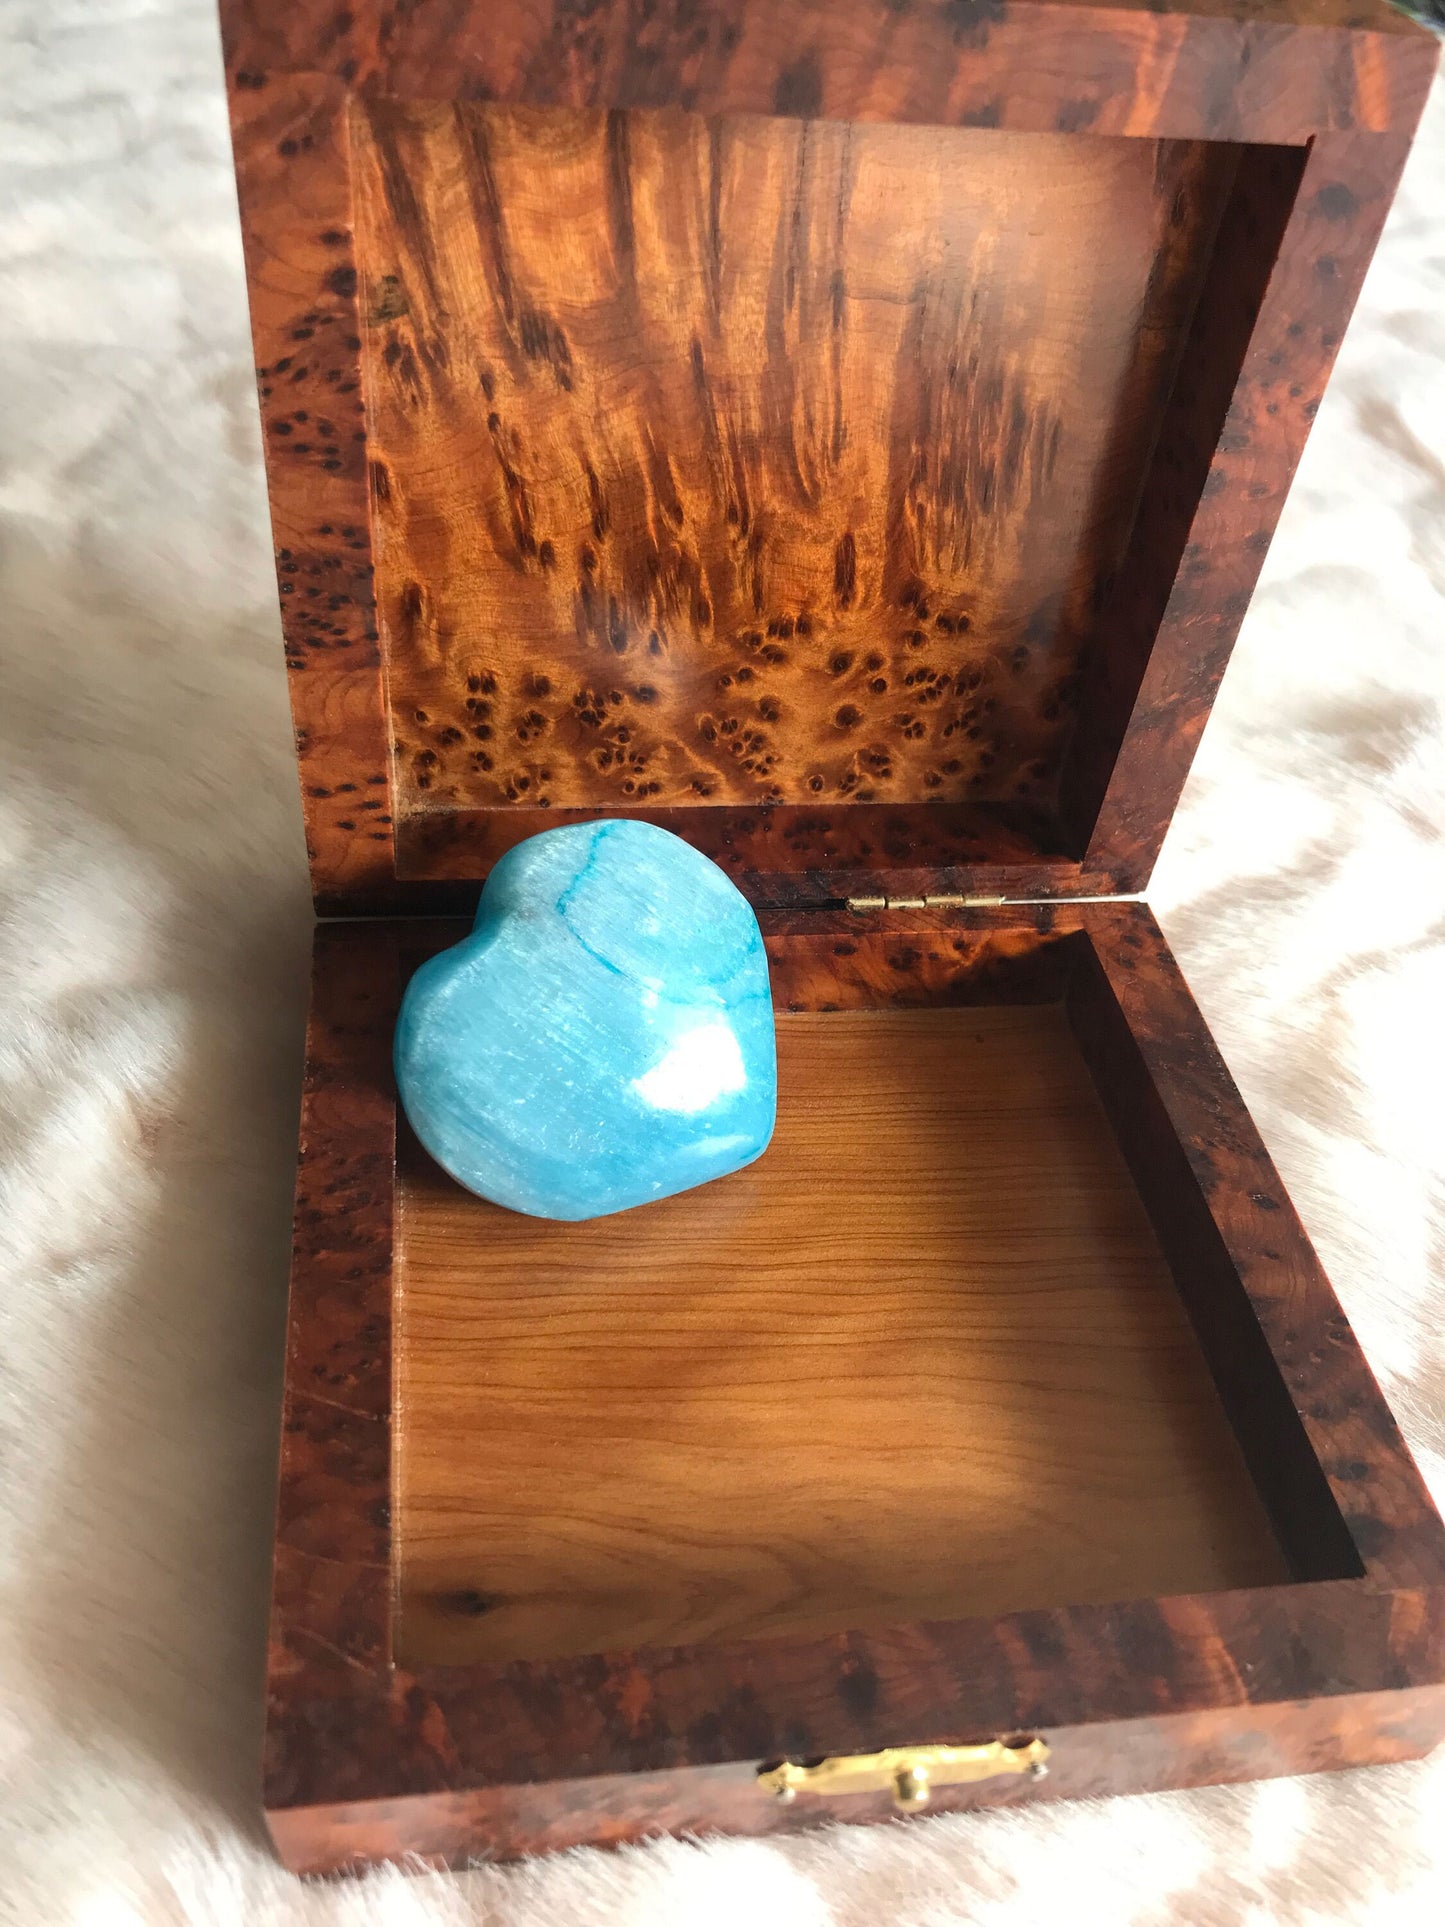 Jewellery small thuya wooden Box walnut wood inlaying,gift idea for Him,wooden box organizer,decorative wooden box holder,Keepsake Box